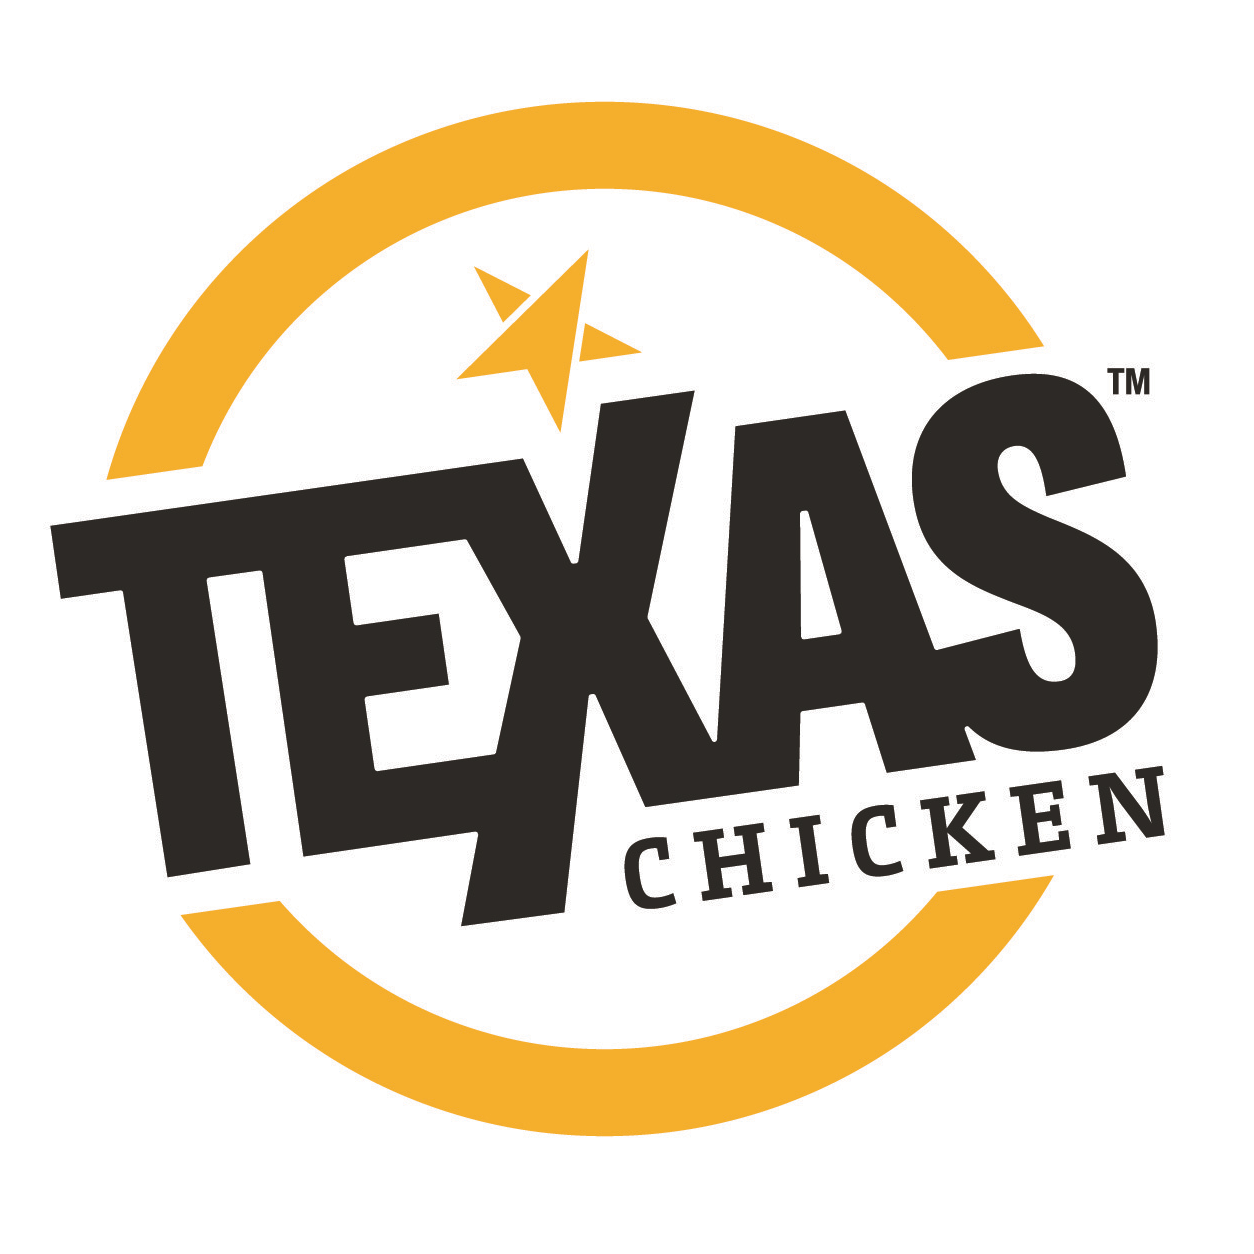 Texas Chicken (The Star Vista) - Dine, Shop, Earn